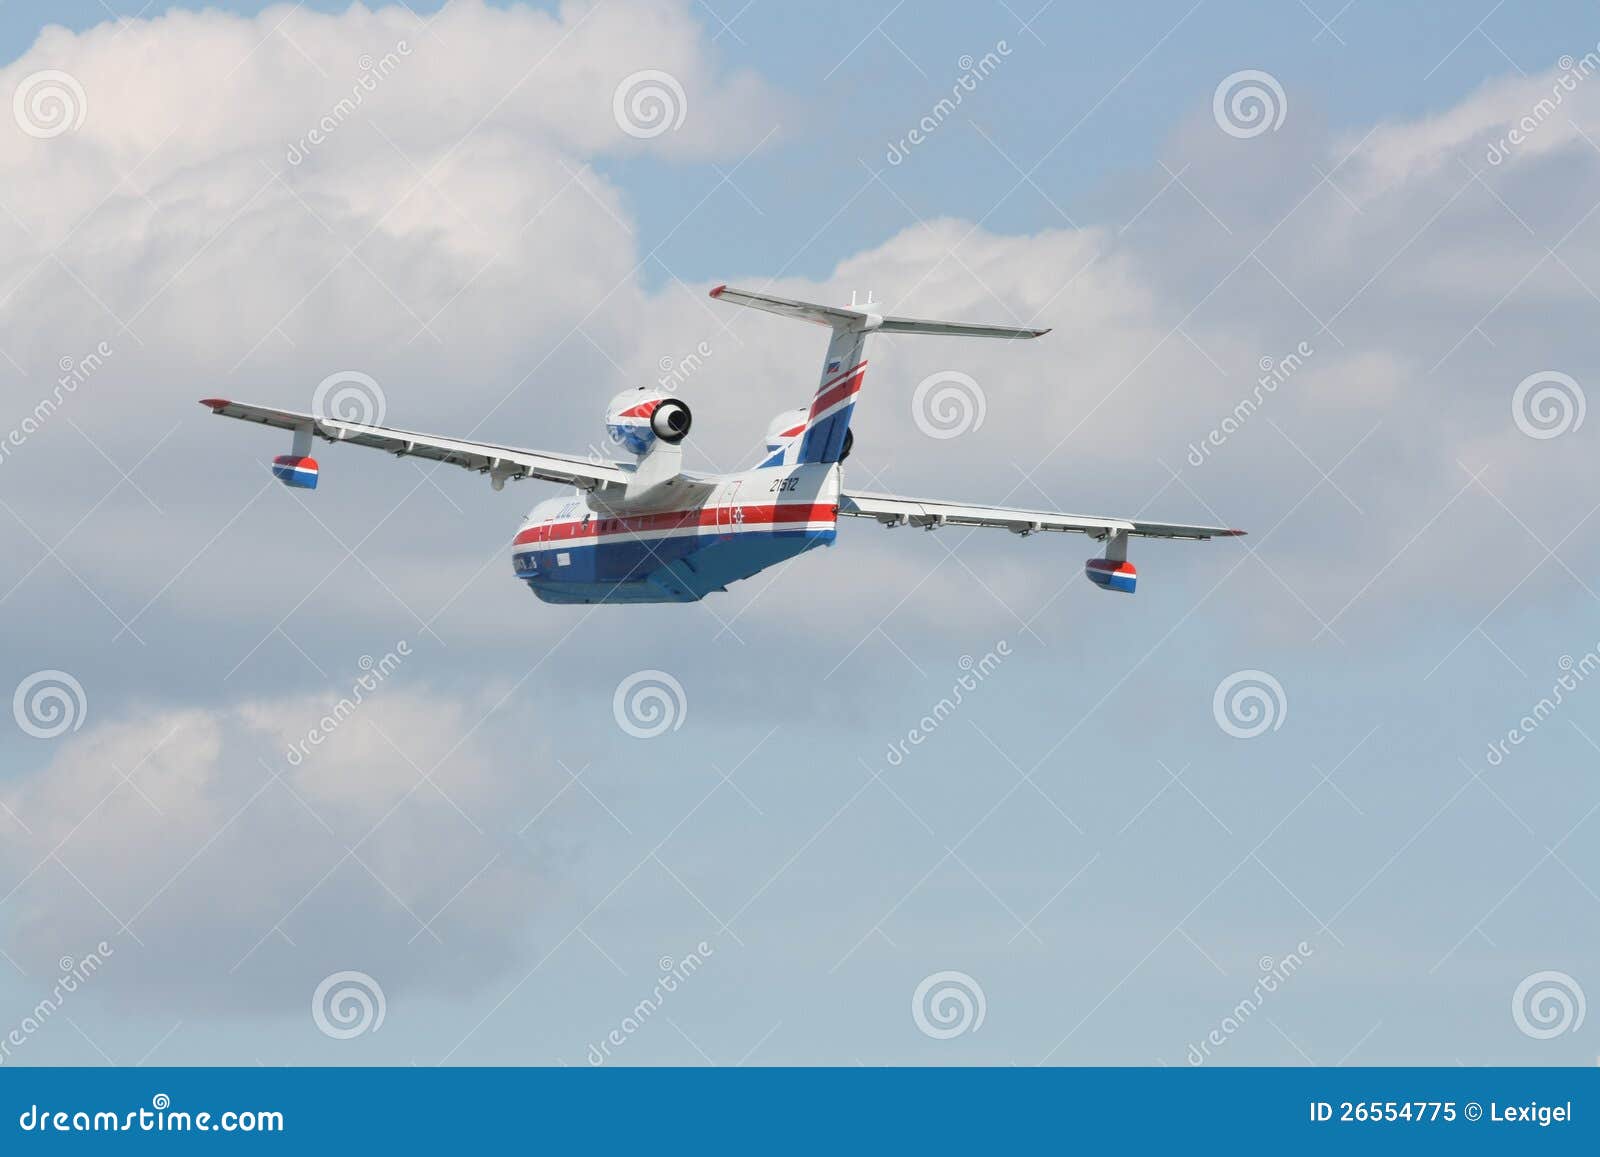 Beriev Be-200 aviation photos on JetPhotos